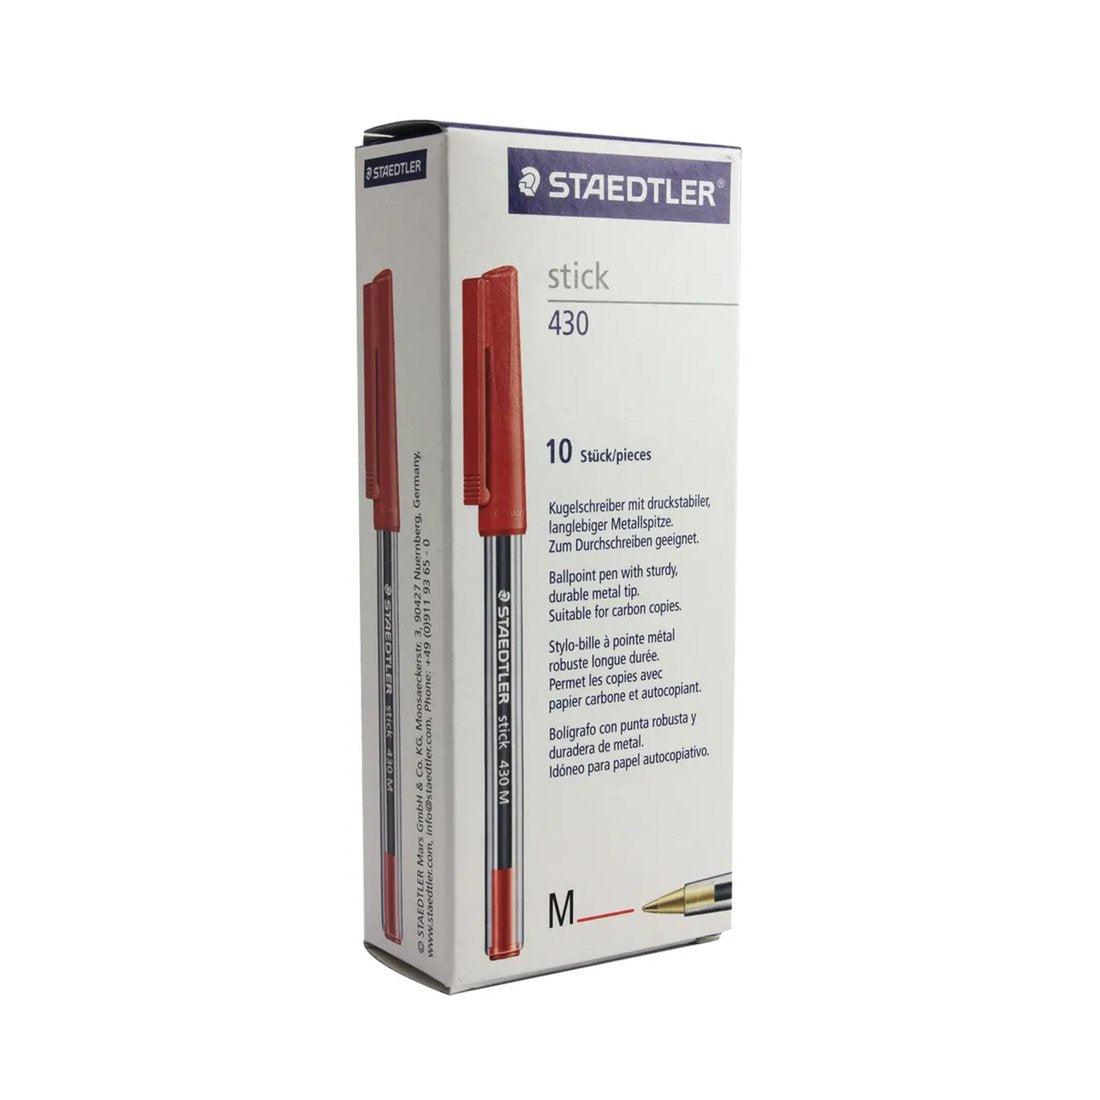 Staedtler: Stick Ballpoint Pens Medium 430 Red Ink - Pack of 10 - Vending Superstore